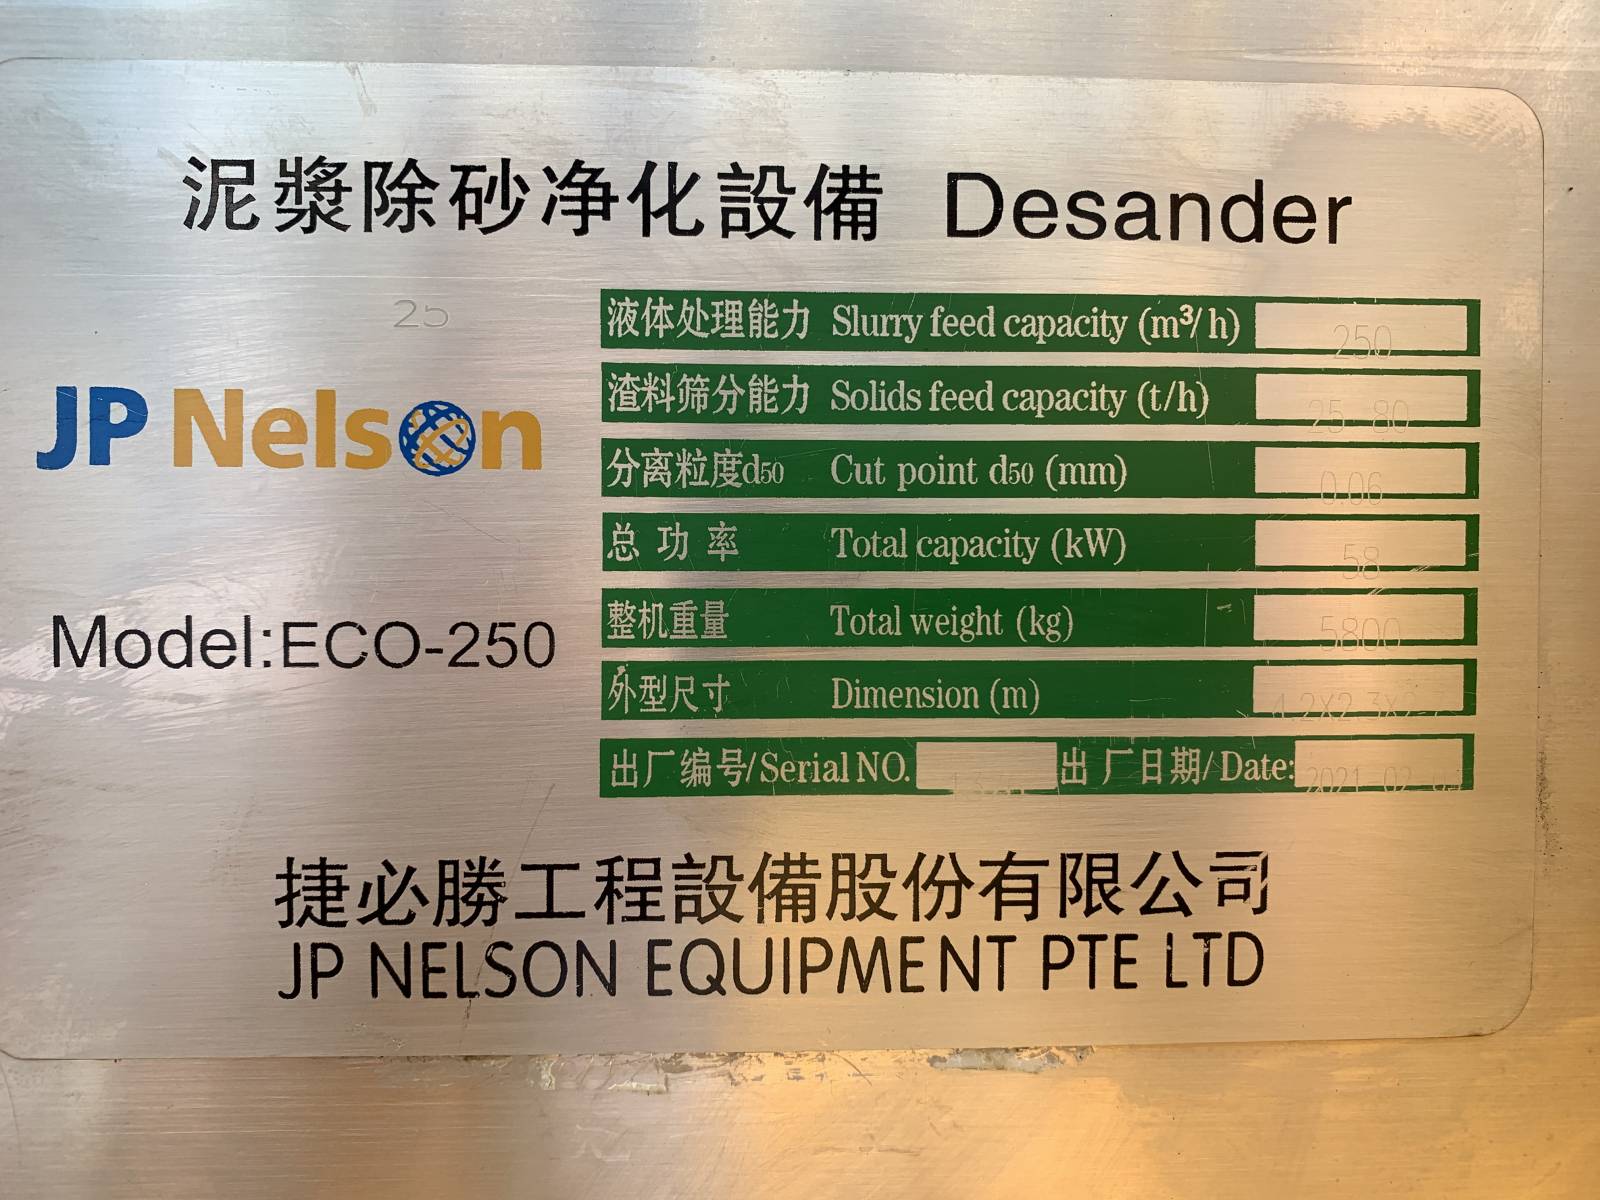 NEW JP NELSON ECO-250 DESANDER